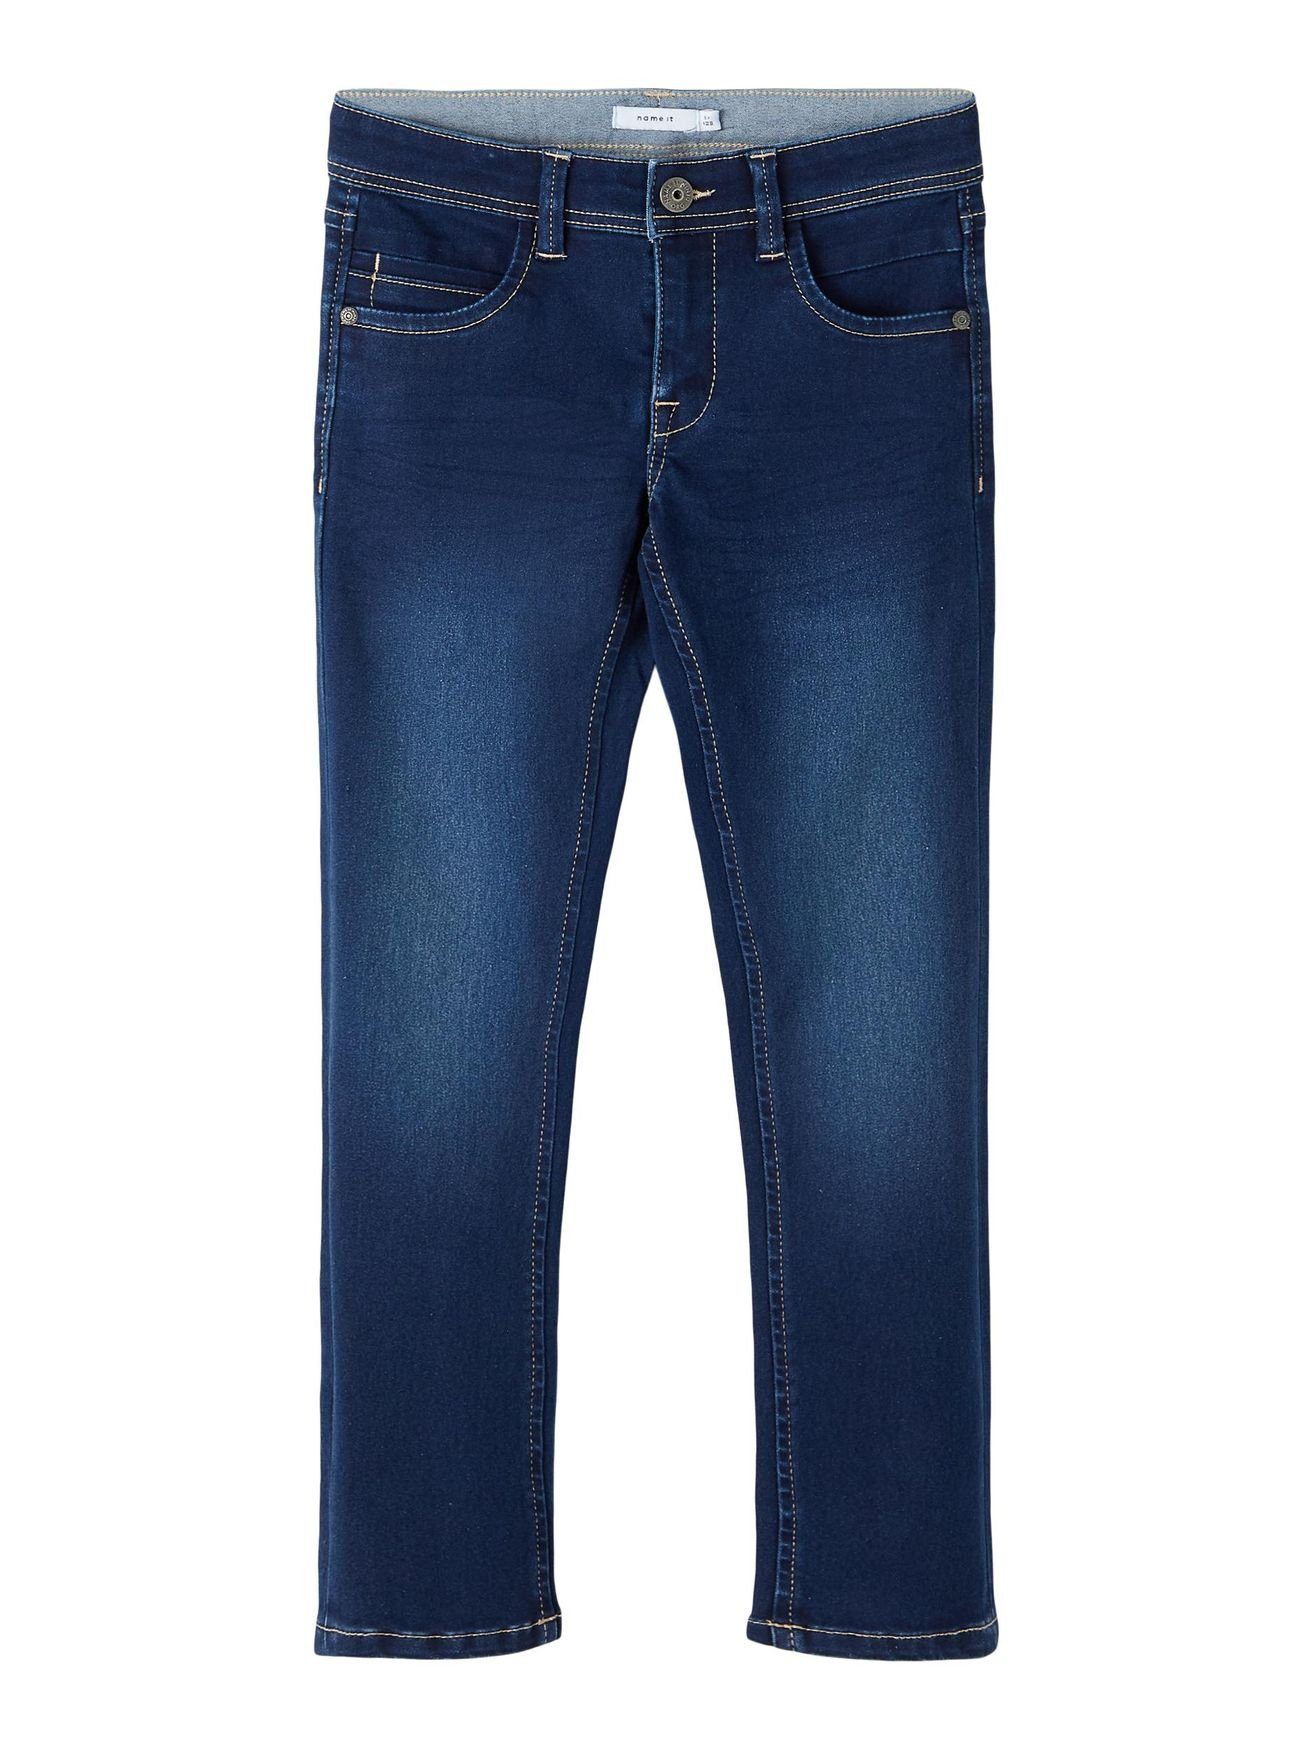 Jeans It NKMSILAS Dunkelblau Regular-fit-Jeans Denim Name Slim 5492 in Fit